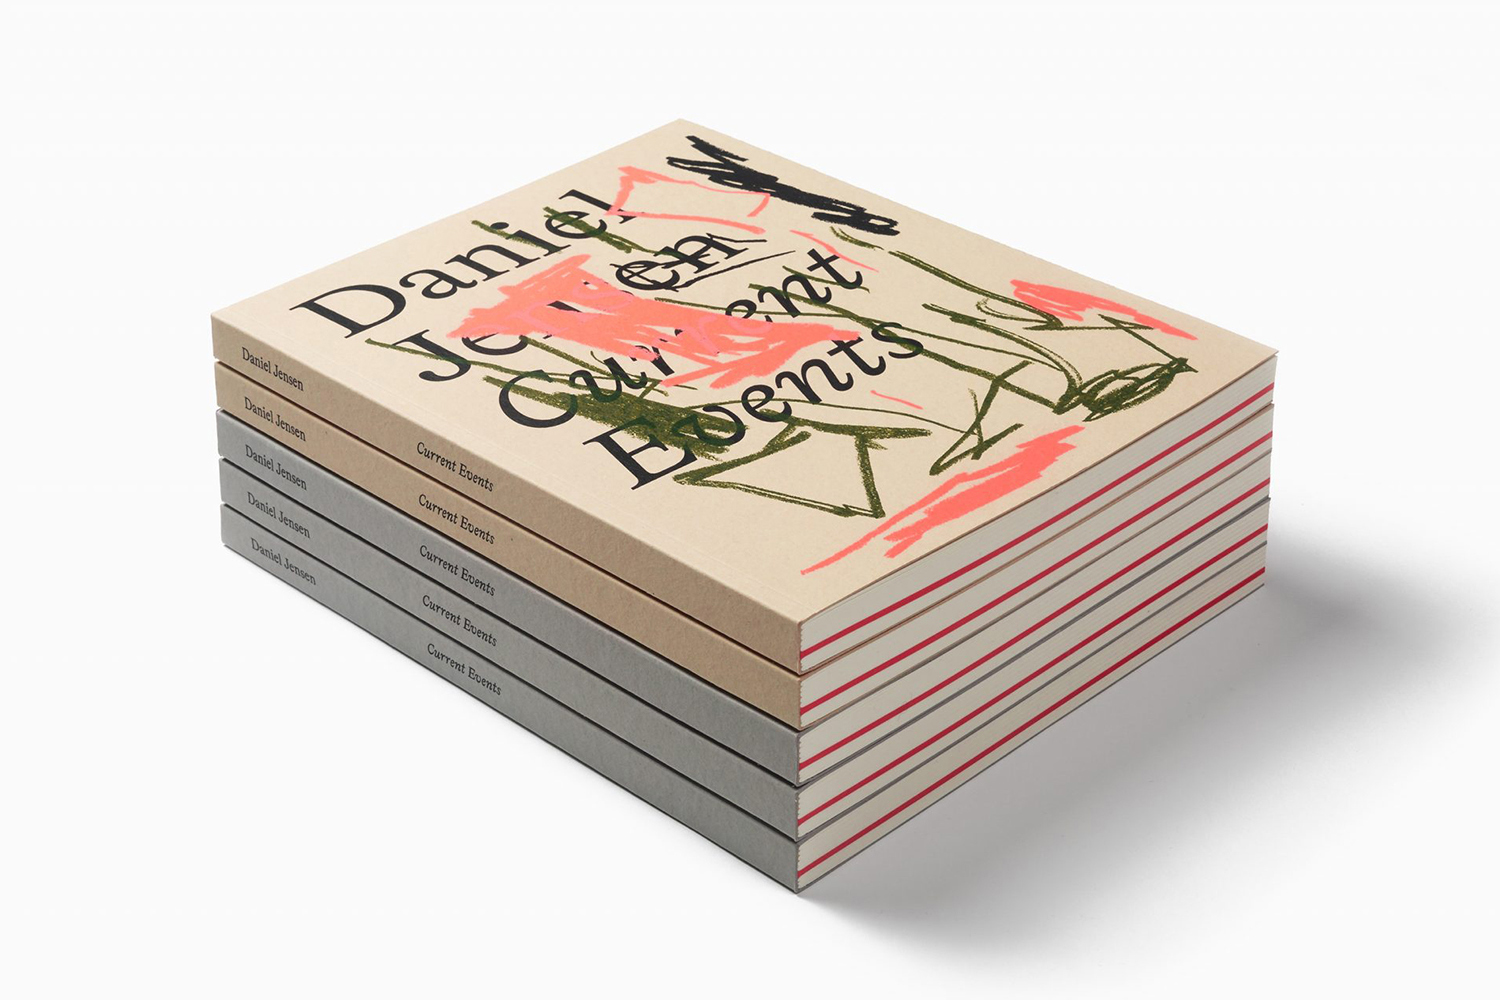 Book Design Inspiration – Daniel Jensen: Current Events by Bedow, Sweden